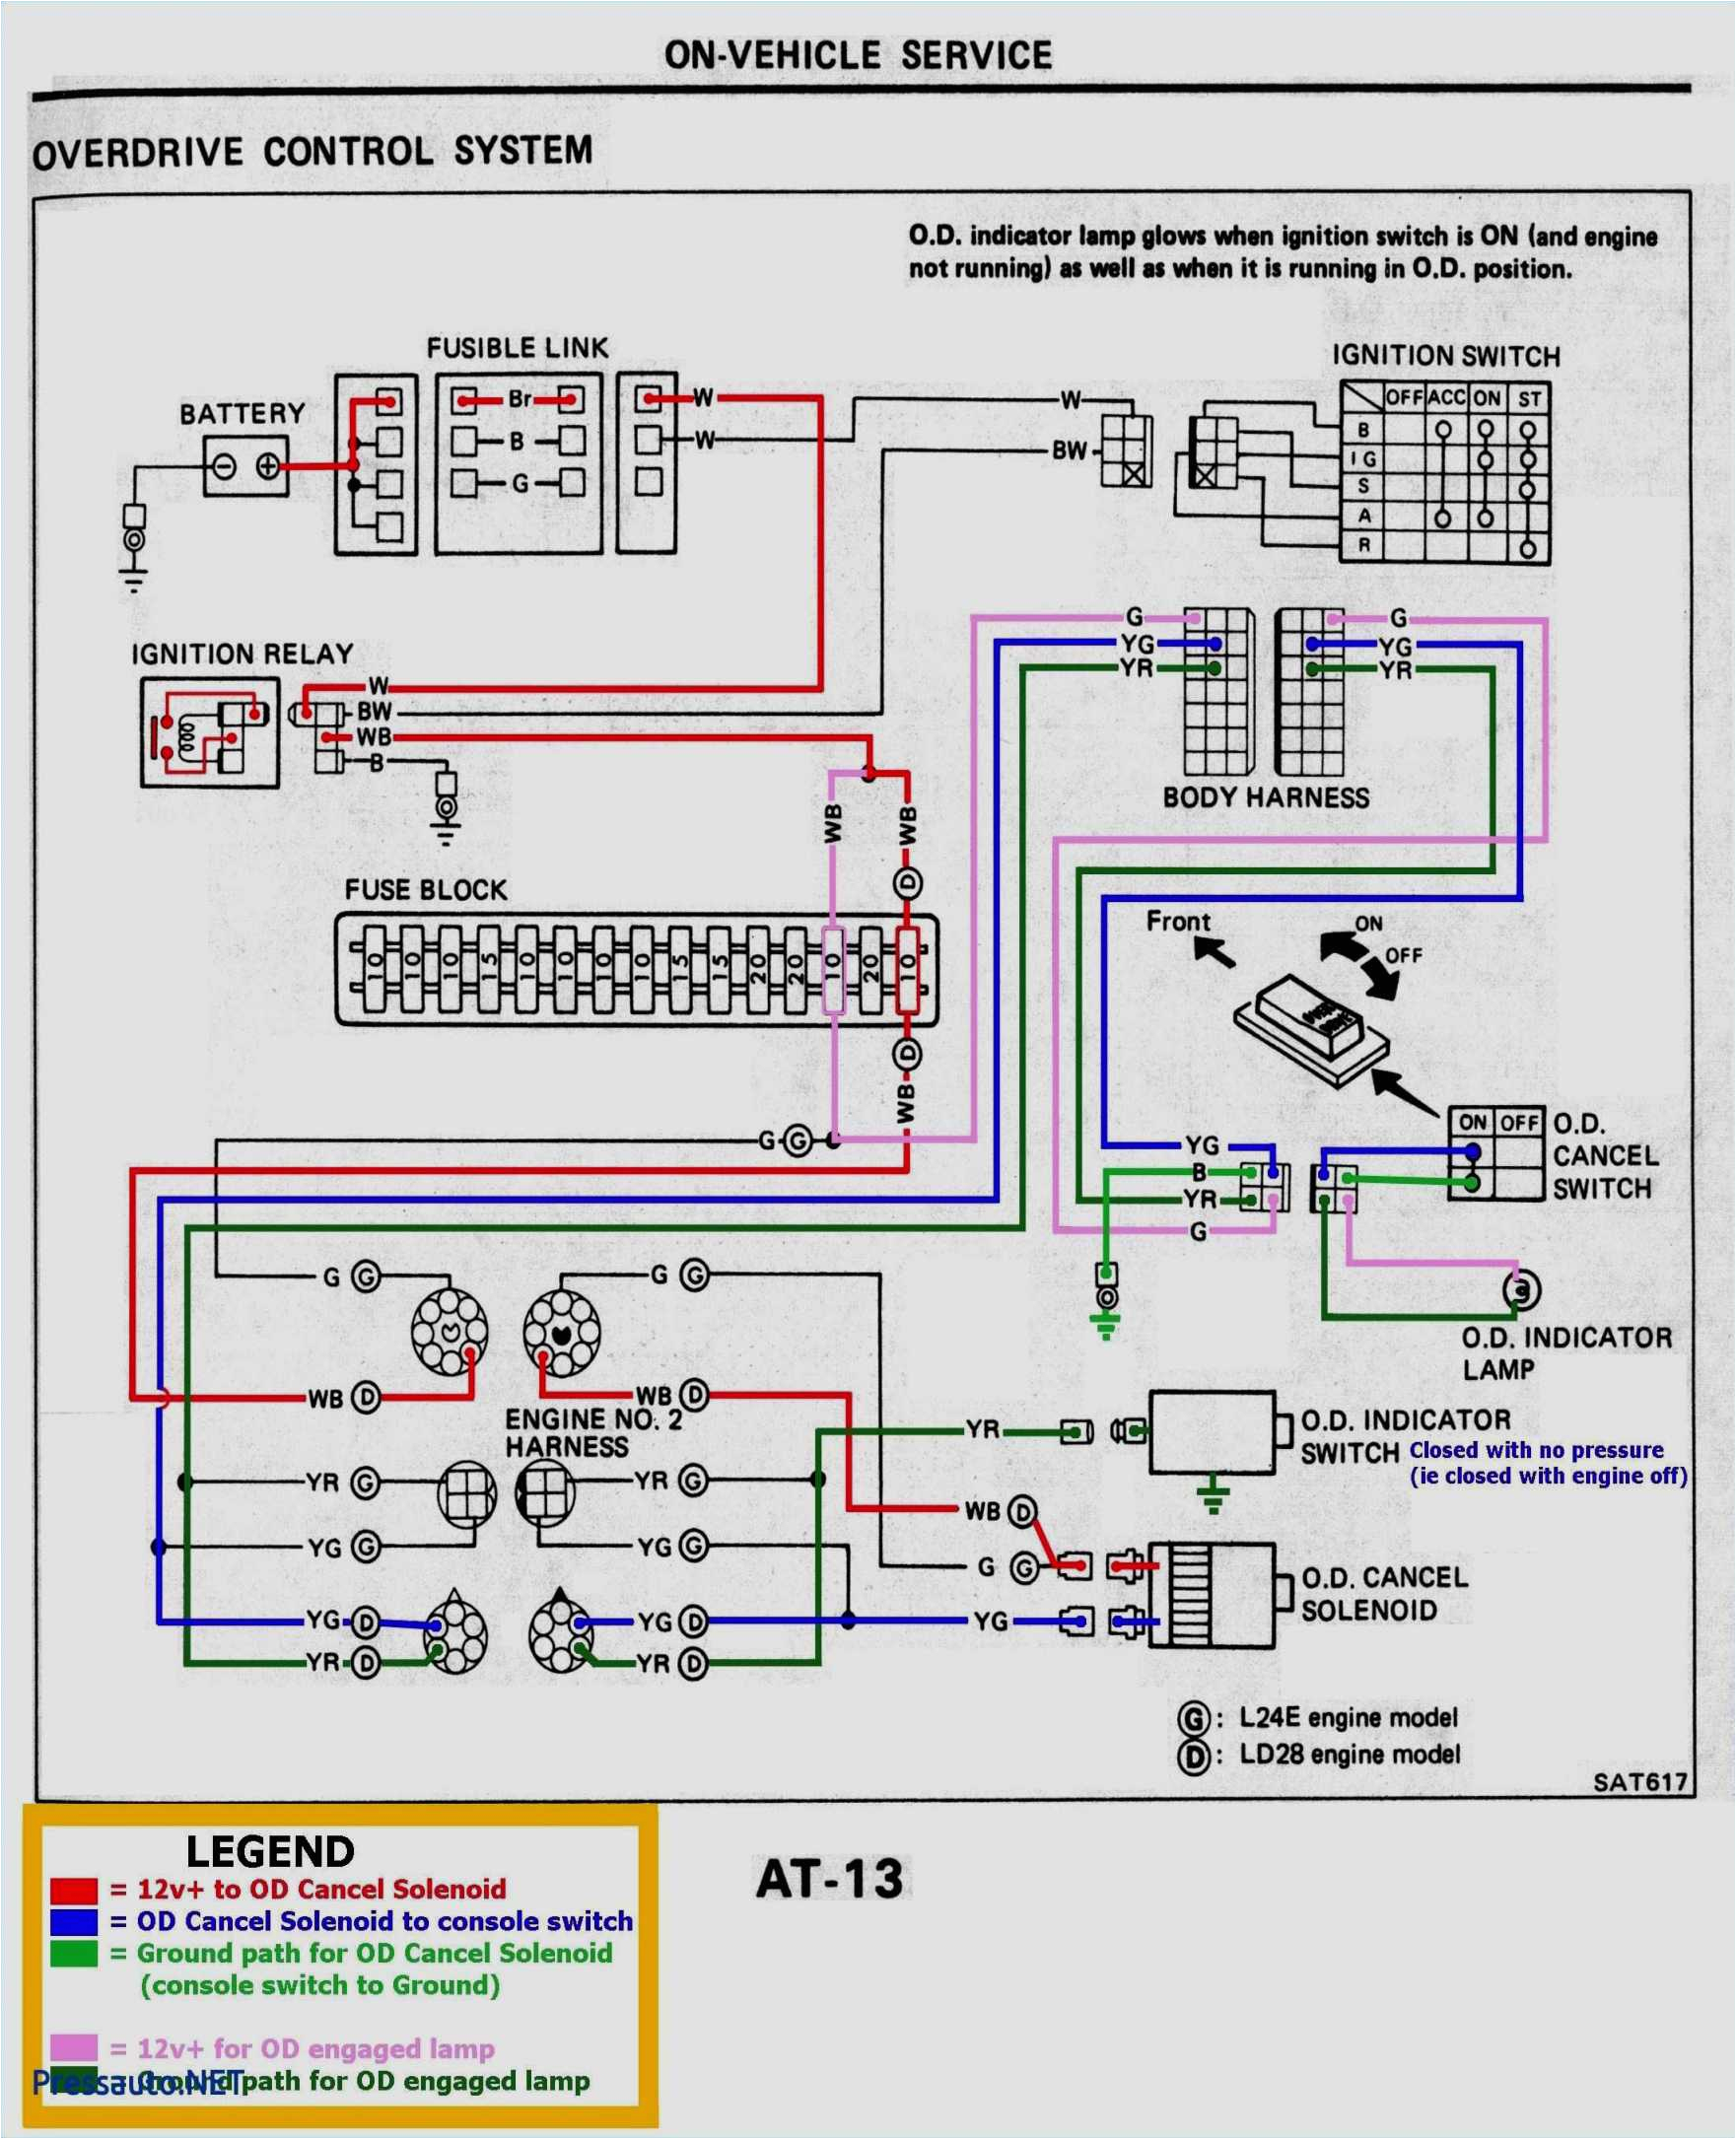 polaris ranger ignition switch wiring diagram polaris wiring diagram fresh wiring diagram for a polaris rzr